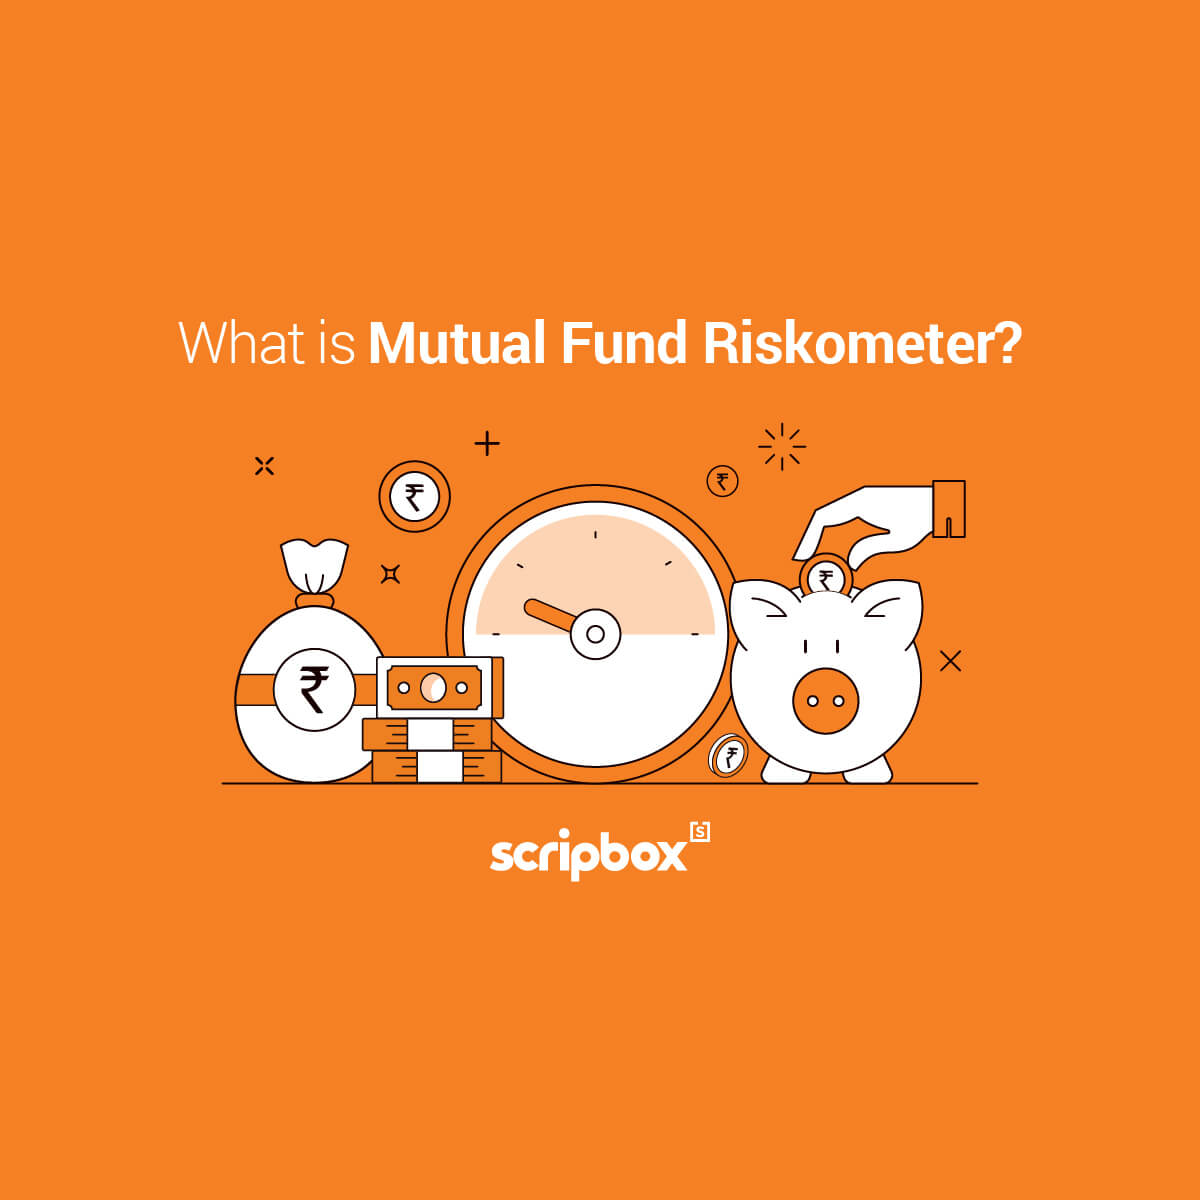 mutual fund riskometer